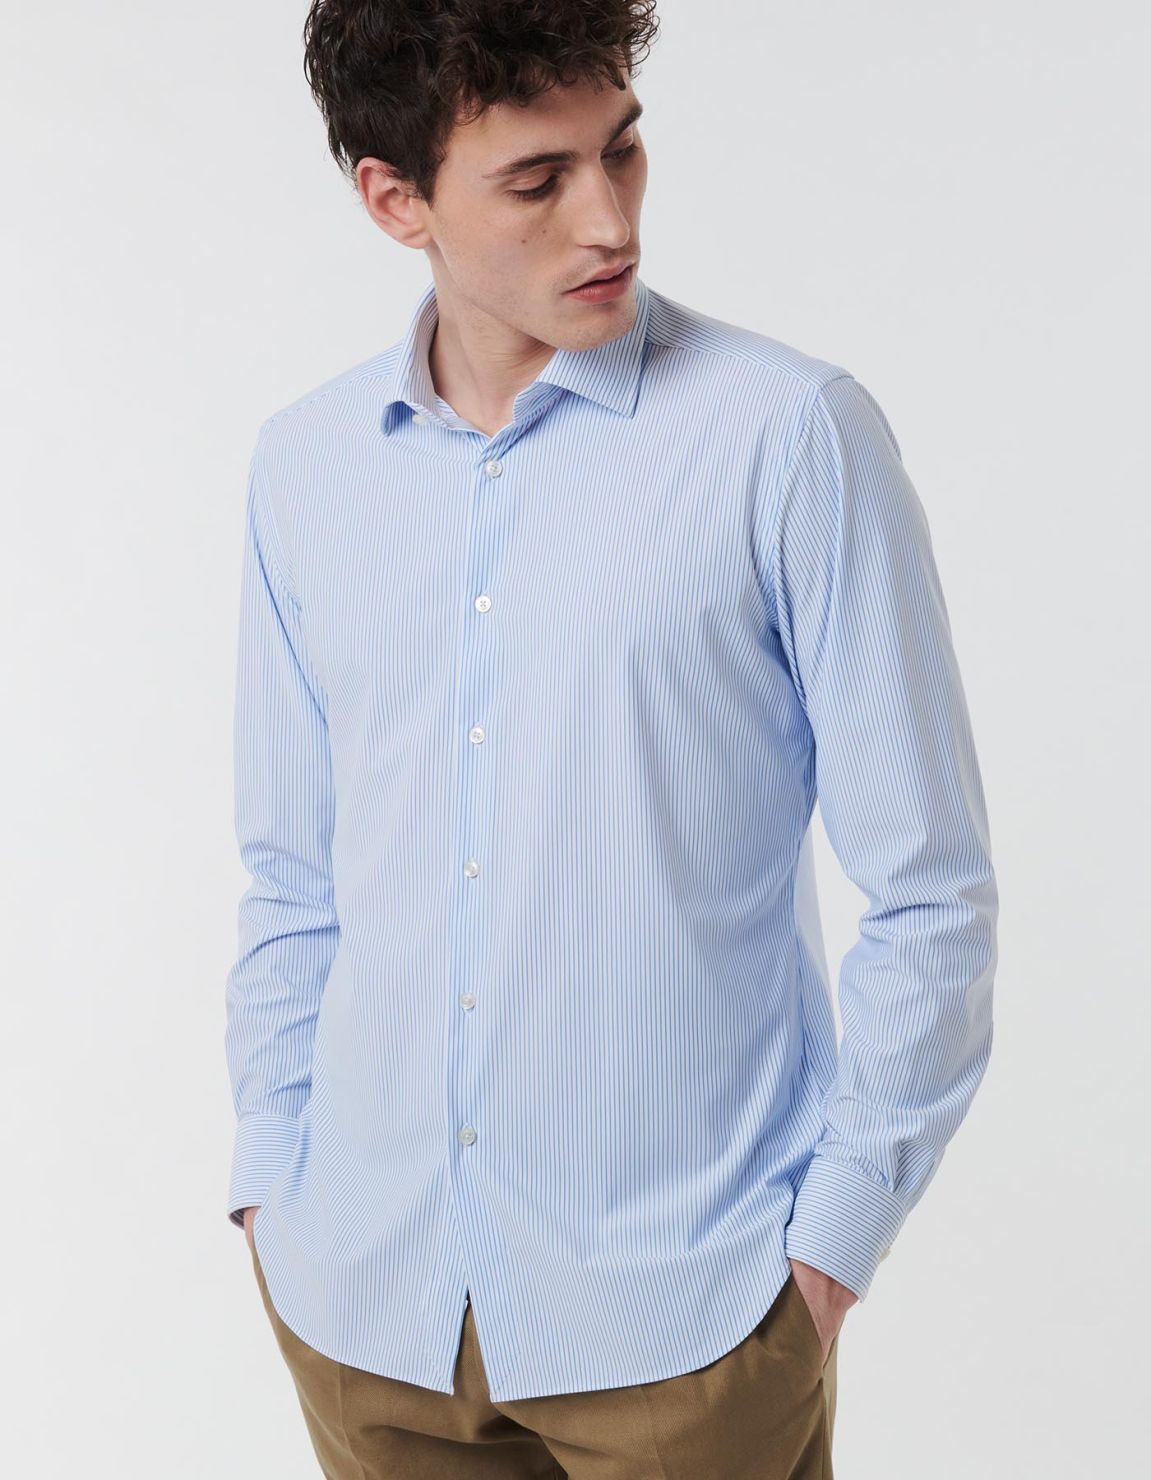 Light Blue Twill Stripe Shirt Collar spread Evolution Classic Fit 3